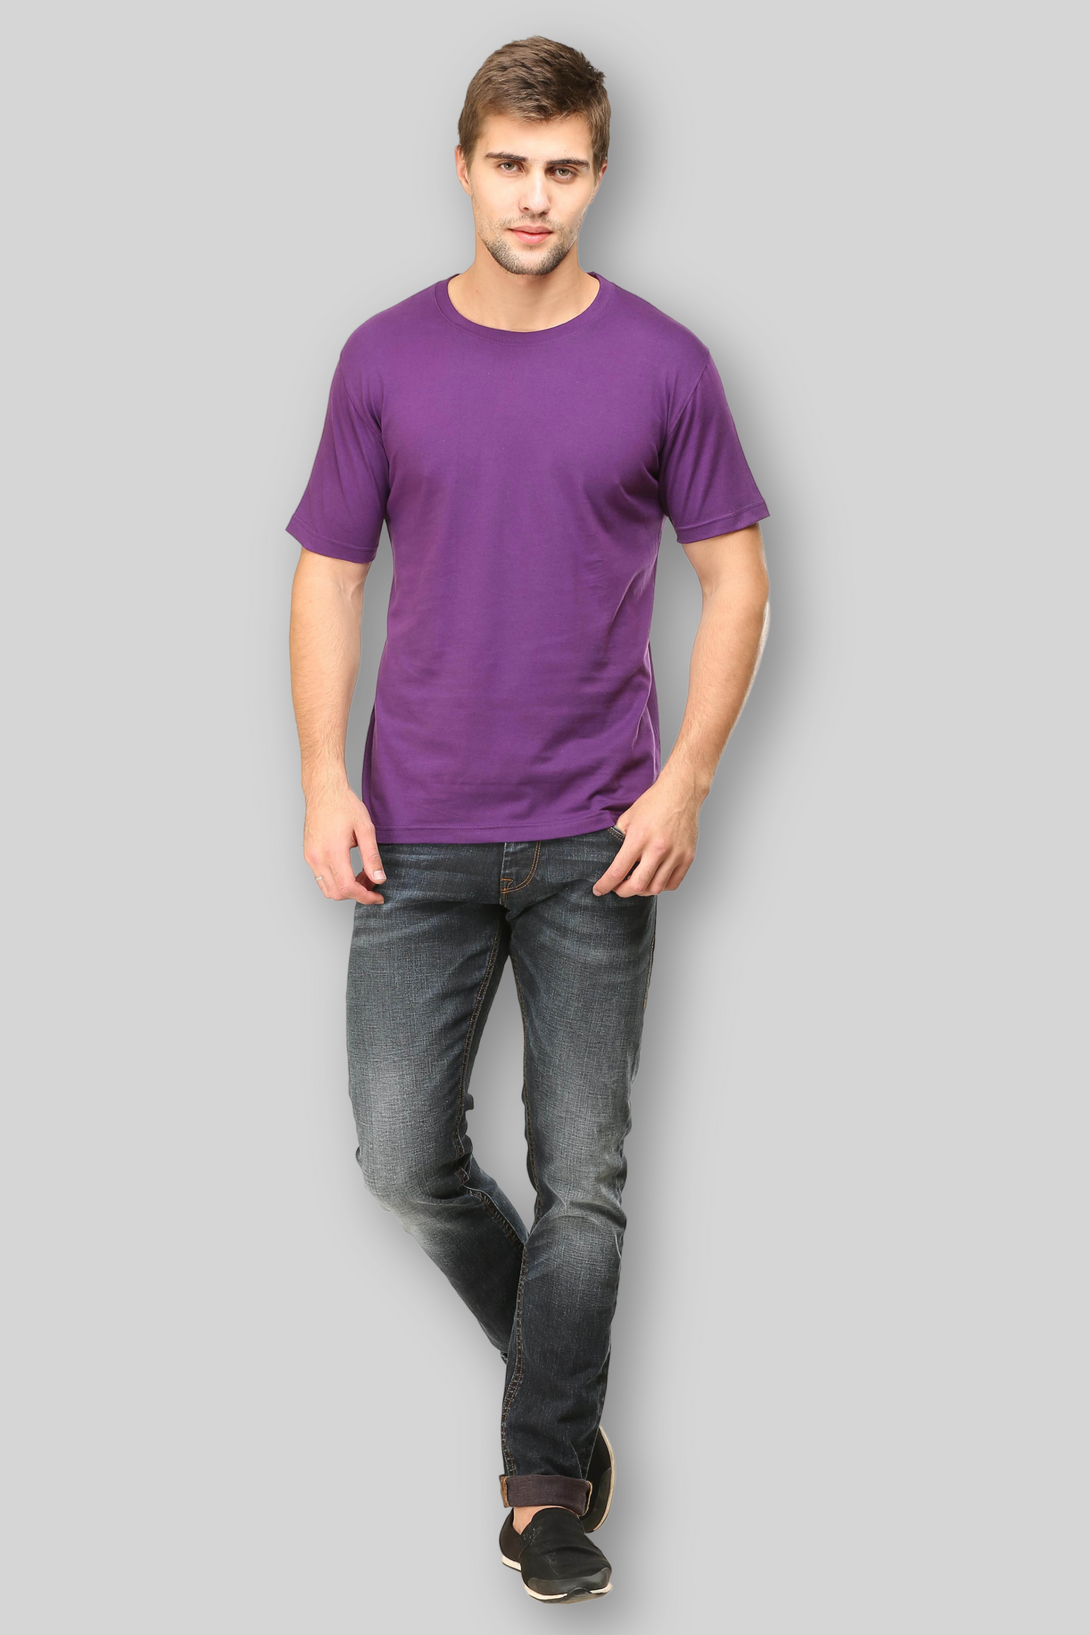 Purple T-Shirt For Men - WowWaves - 1